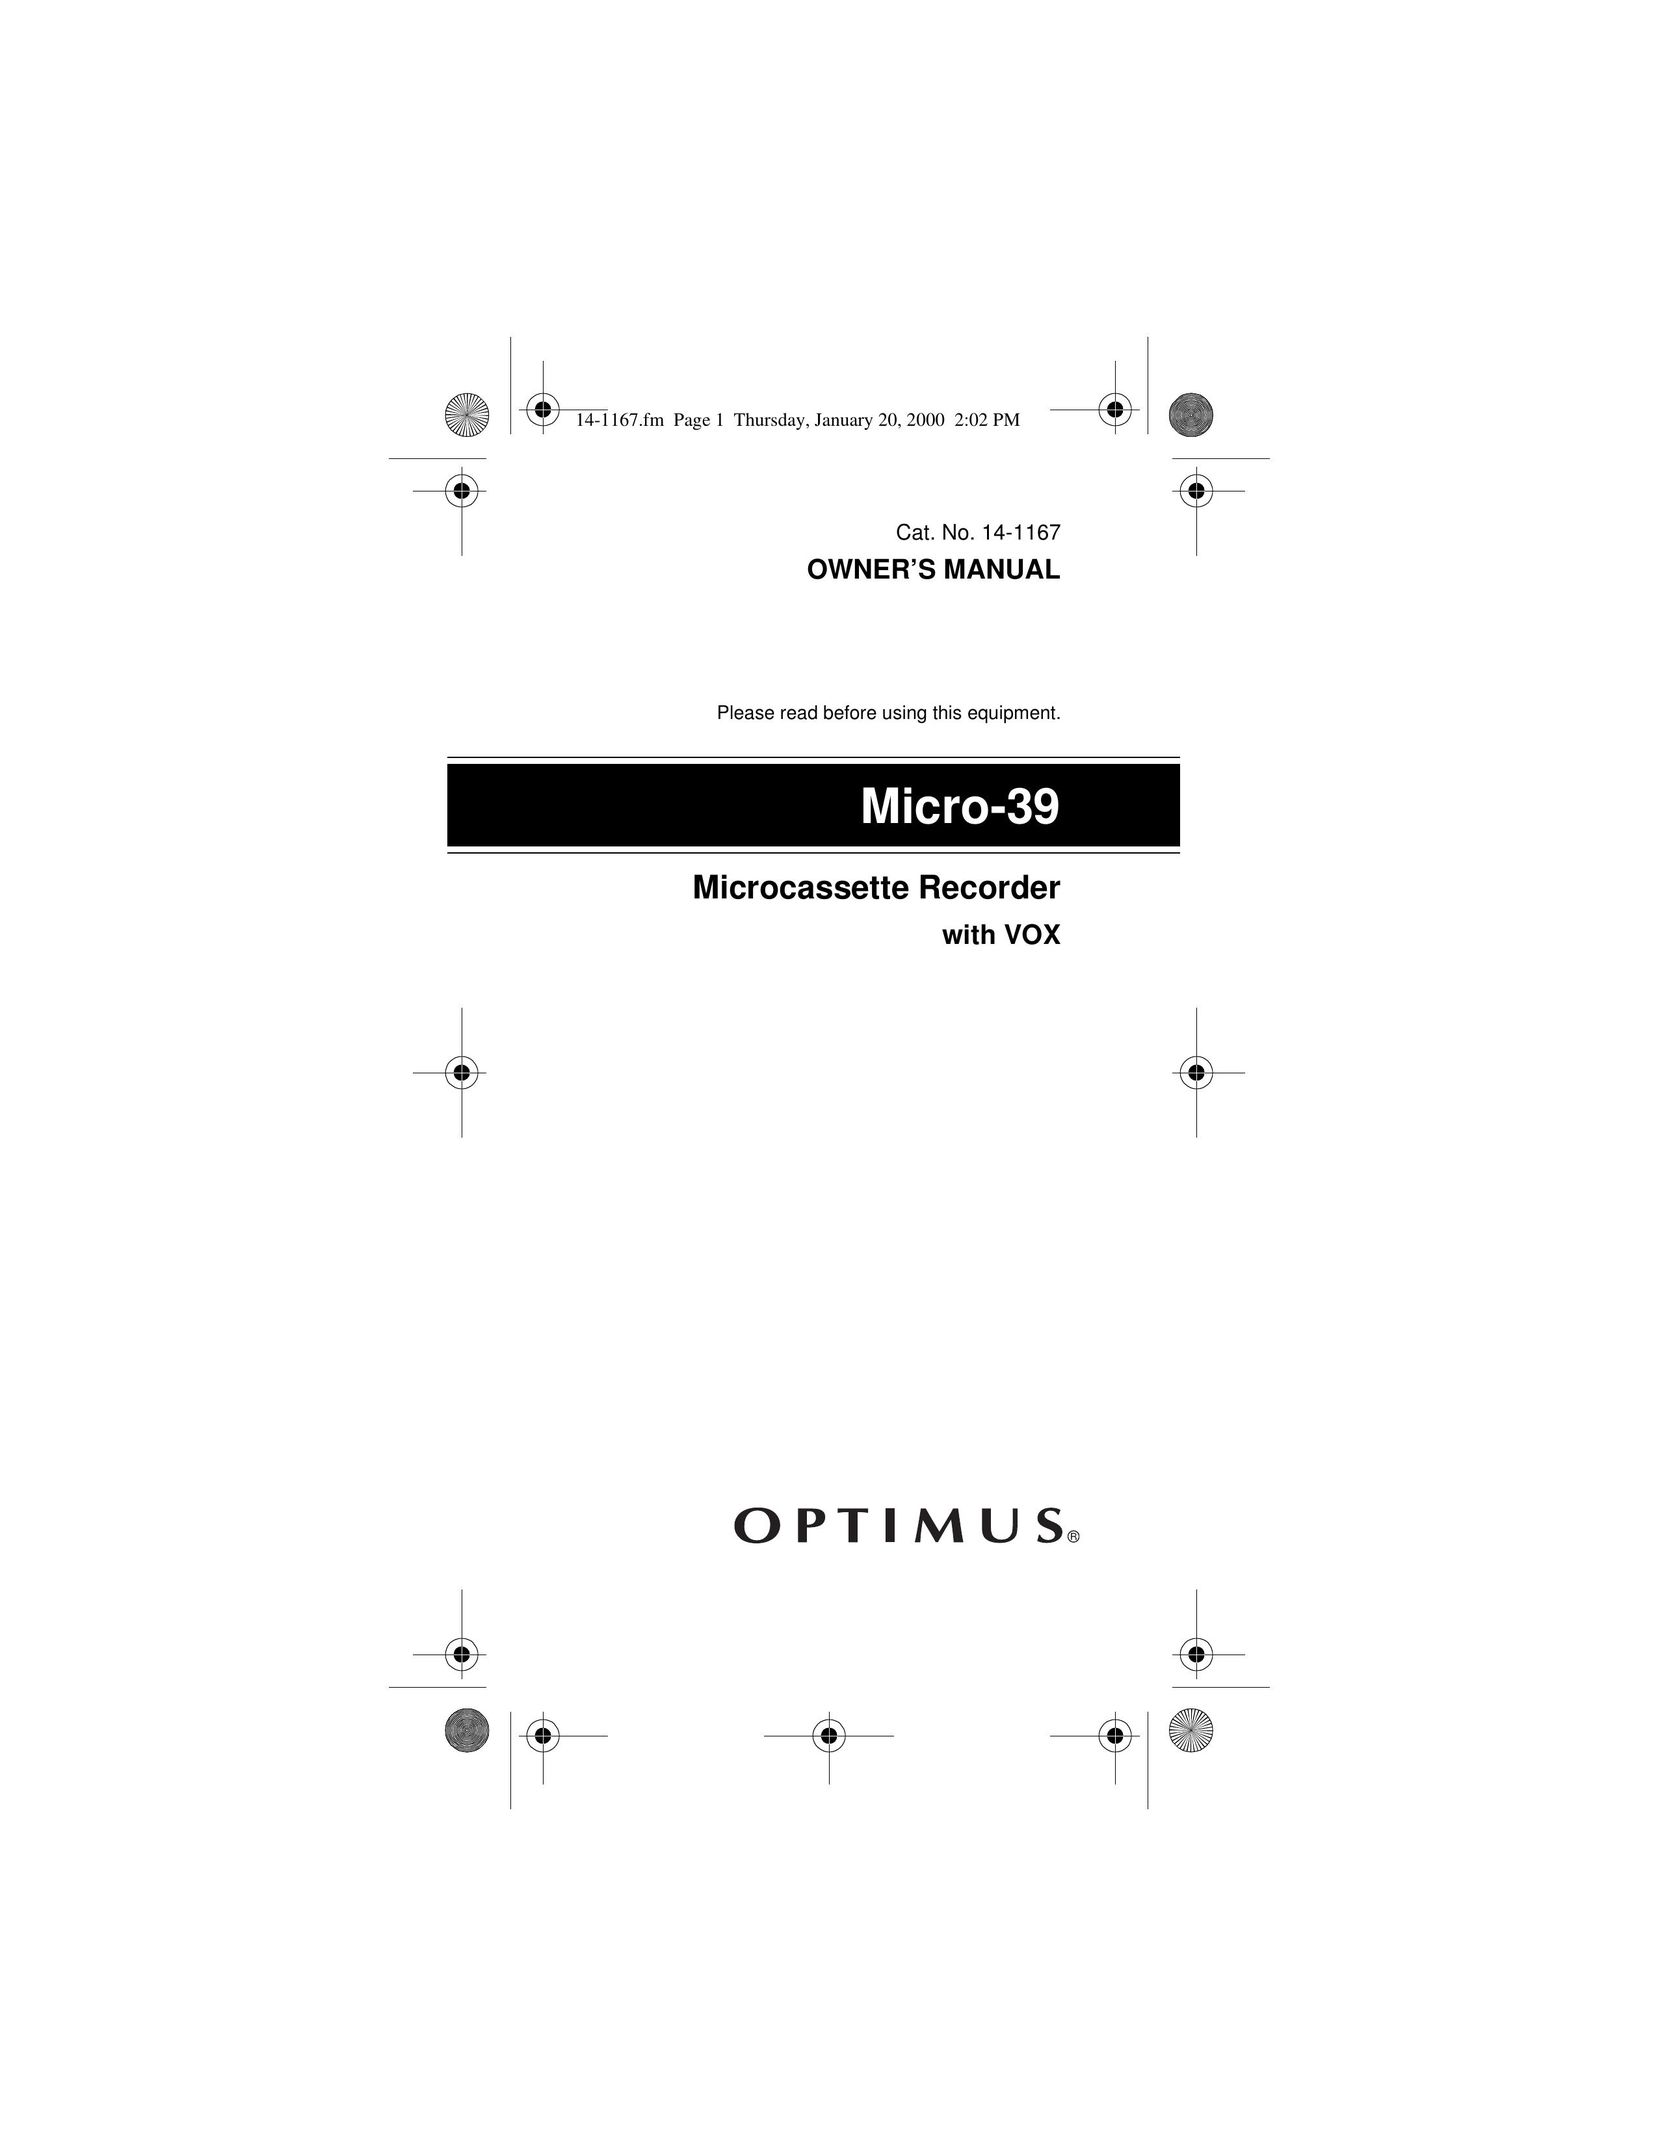 Optimus MICRO-39 Microcassette Recorder User Manual